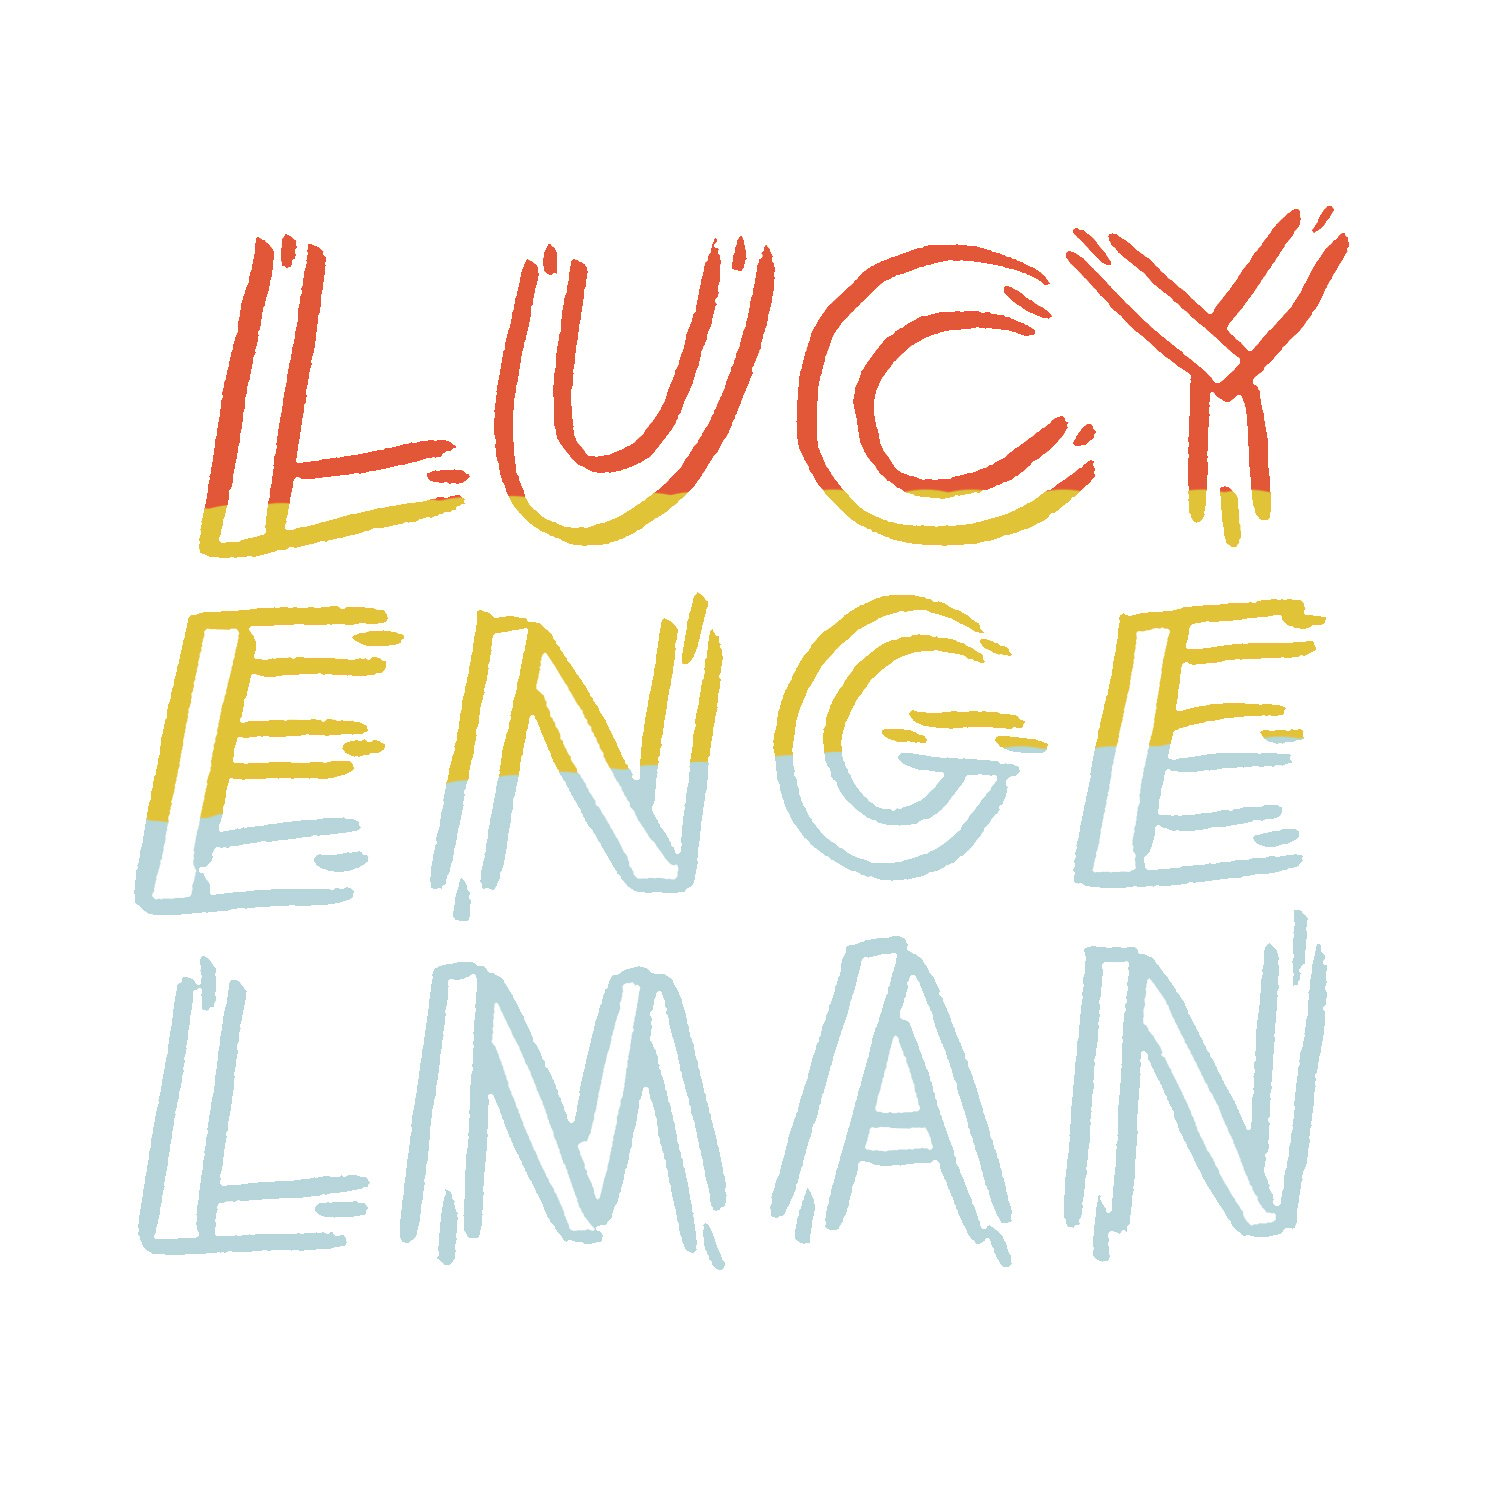 Lucy Engelman Illustrations